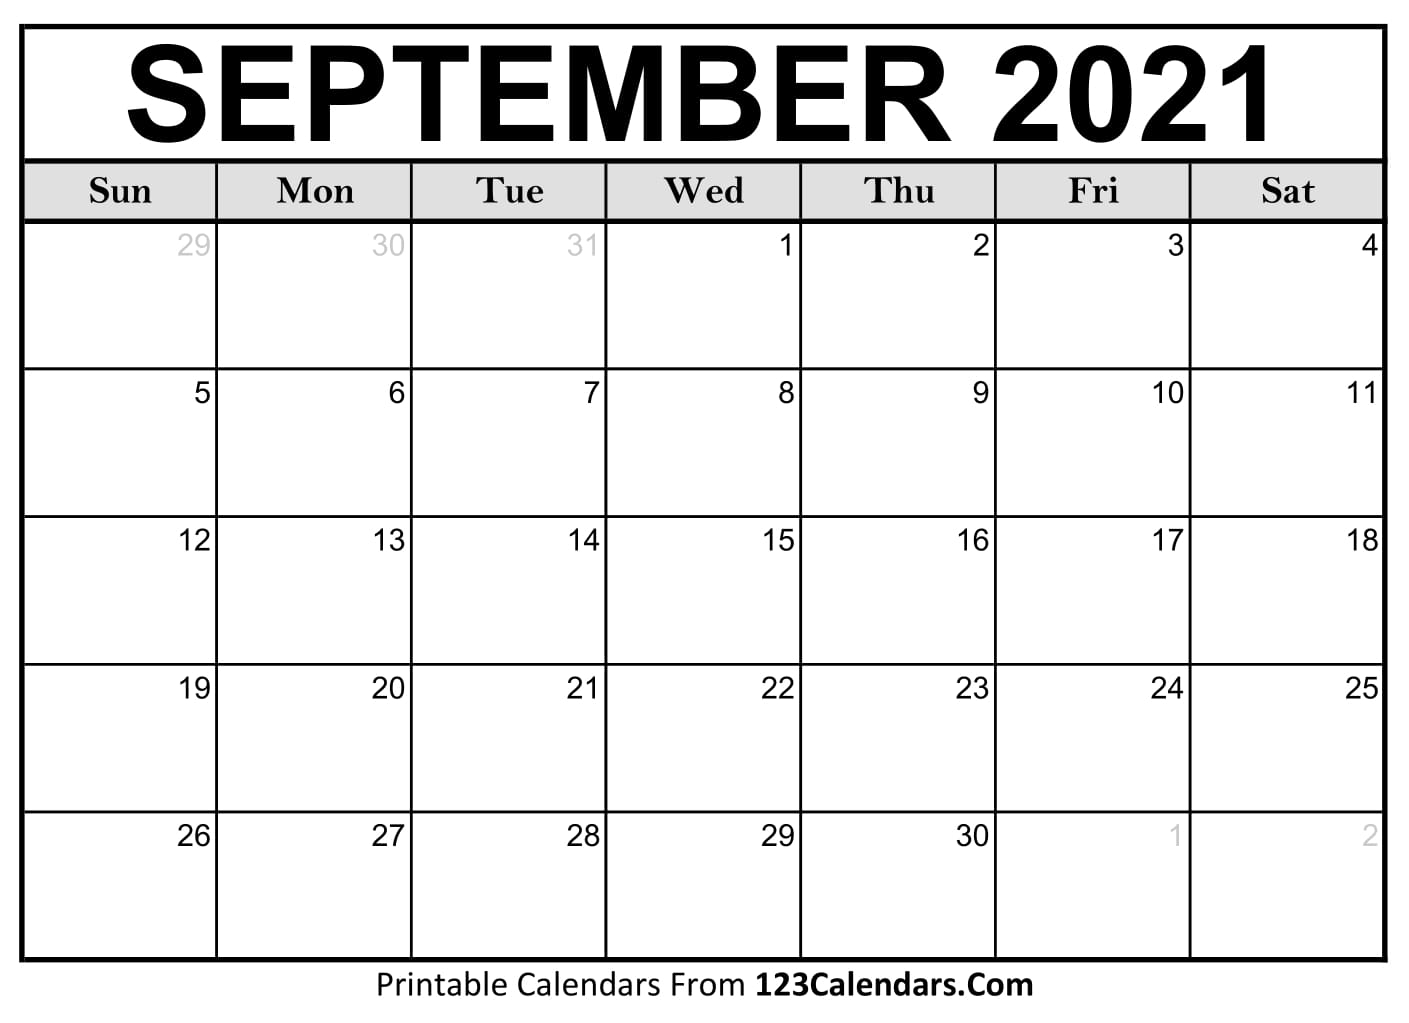 Printable September 2021 Calendar Templates | 123Calendars